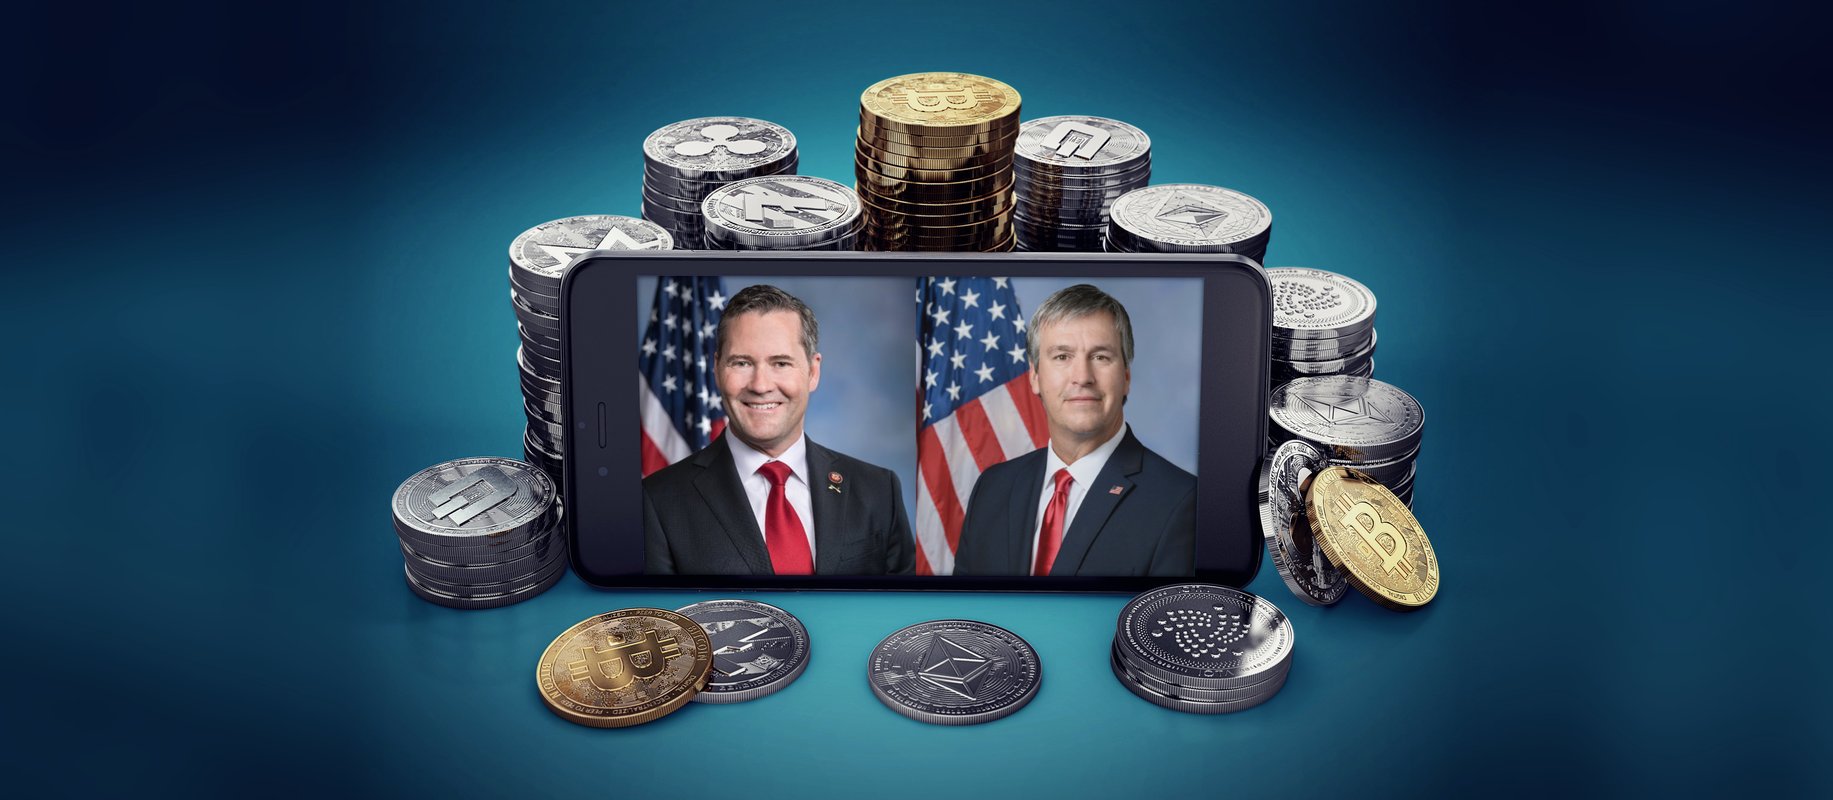 Alabamian and Floridian Representatives Went Crypto Shopping This Summer